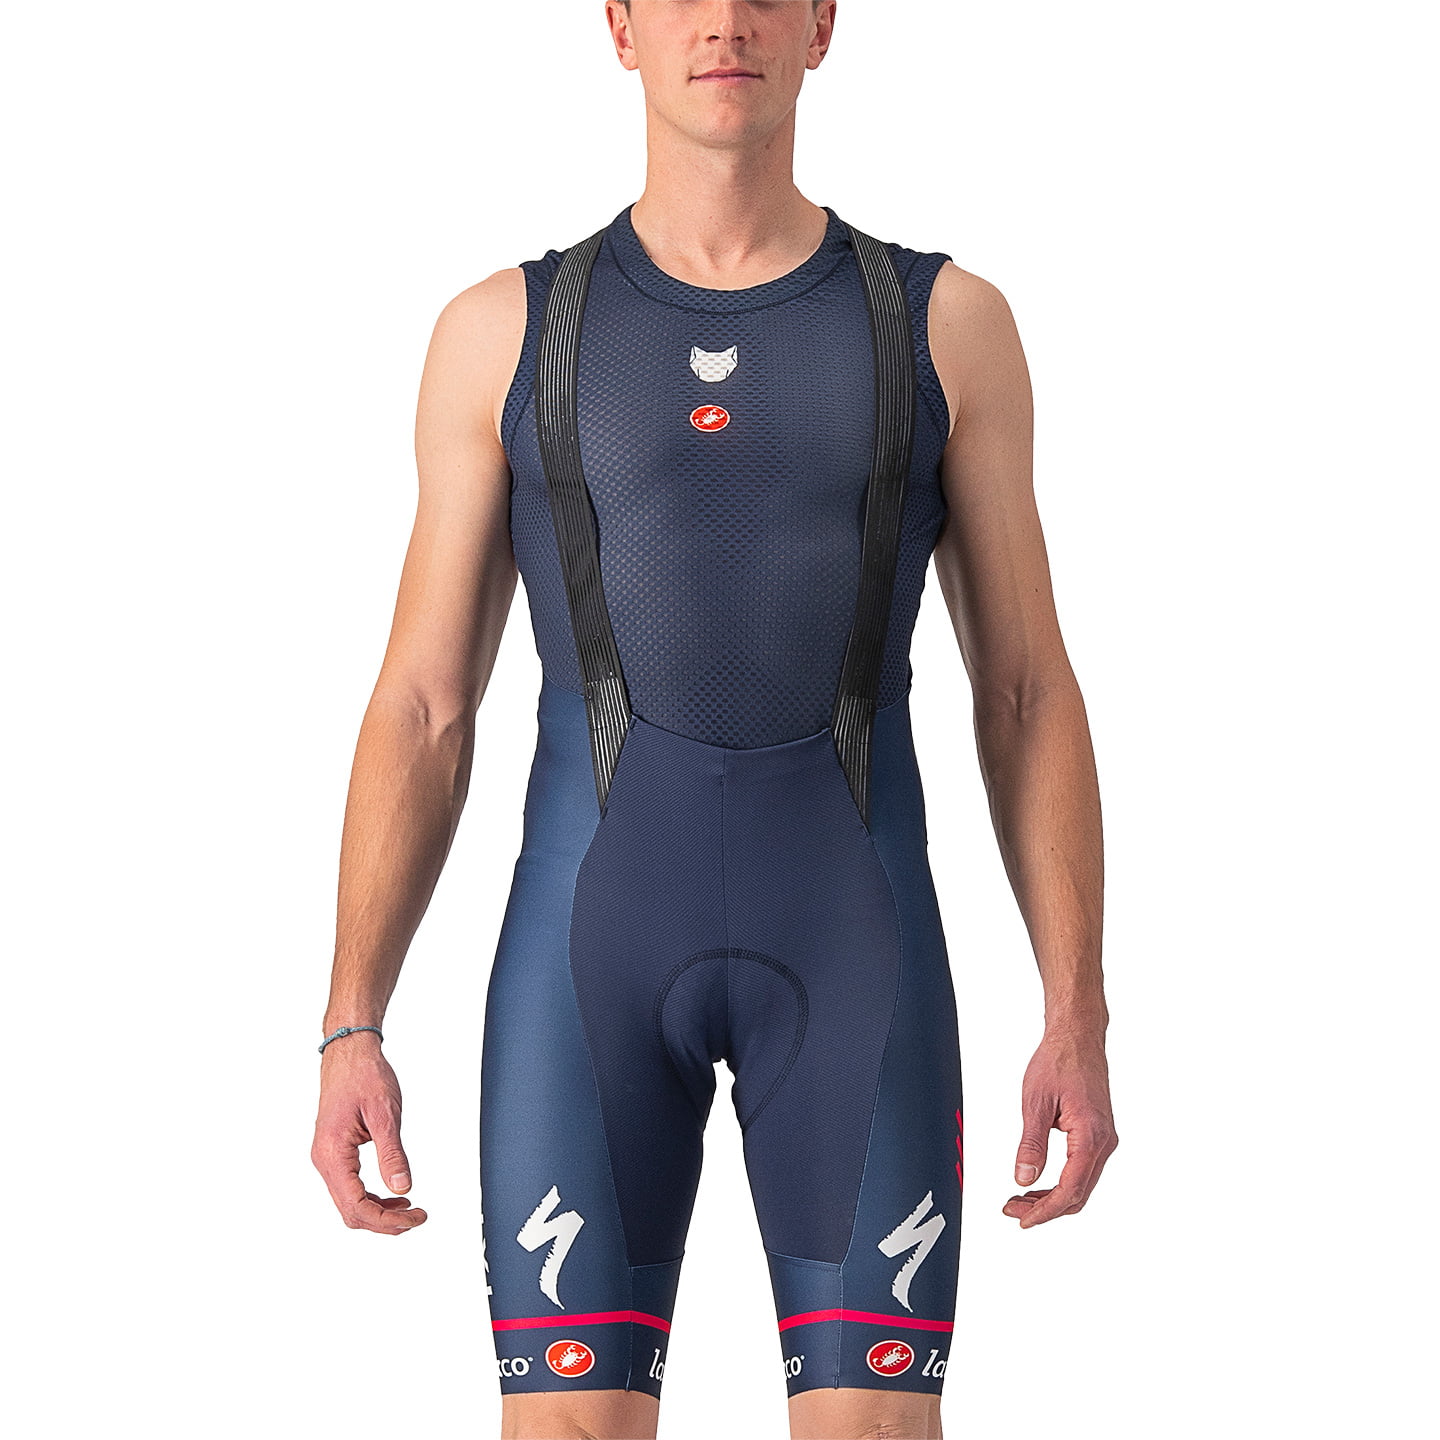 QUICK-STEP ALPHA VINYL Free Aero Race Pro 2022 Bib Shorts, for men, size S, Cycle shorts, Cycling clothing